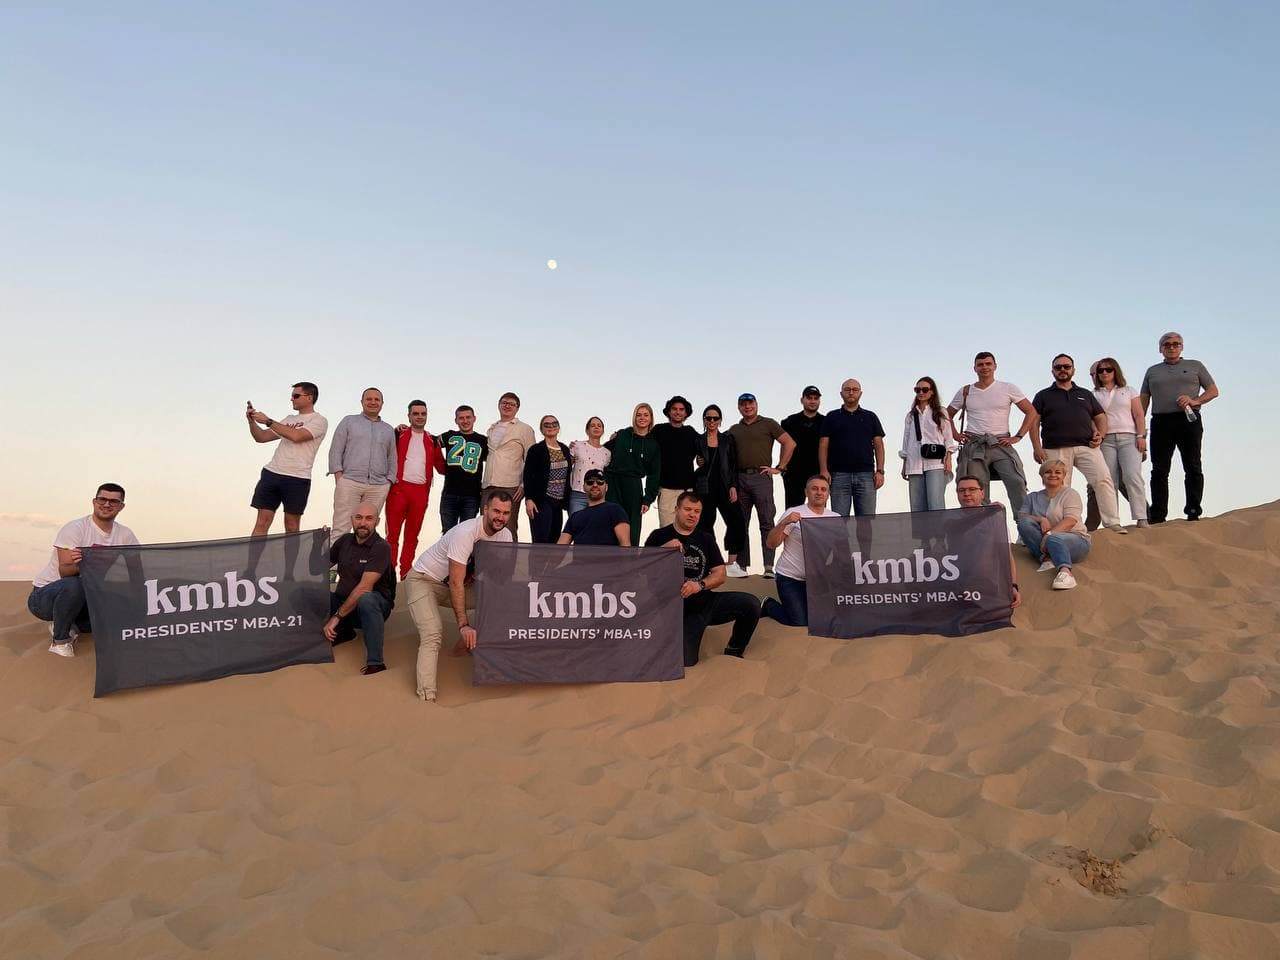 We open the UAE: Presidents ’MBA kmbs international study module